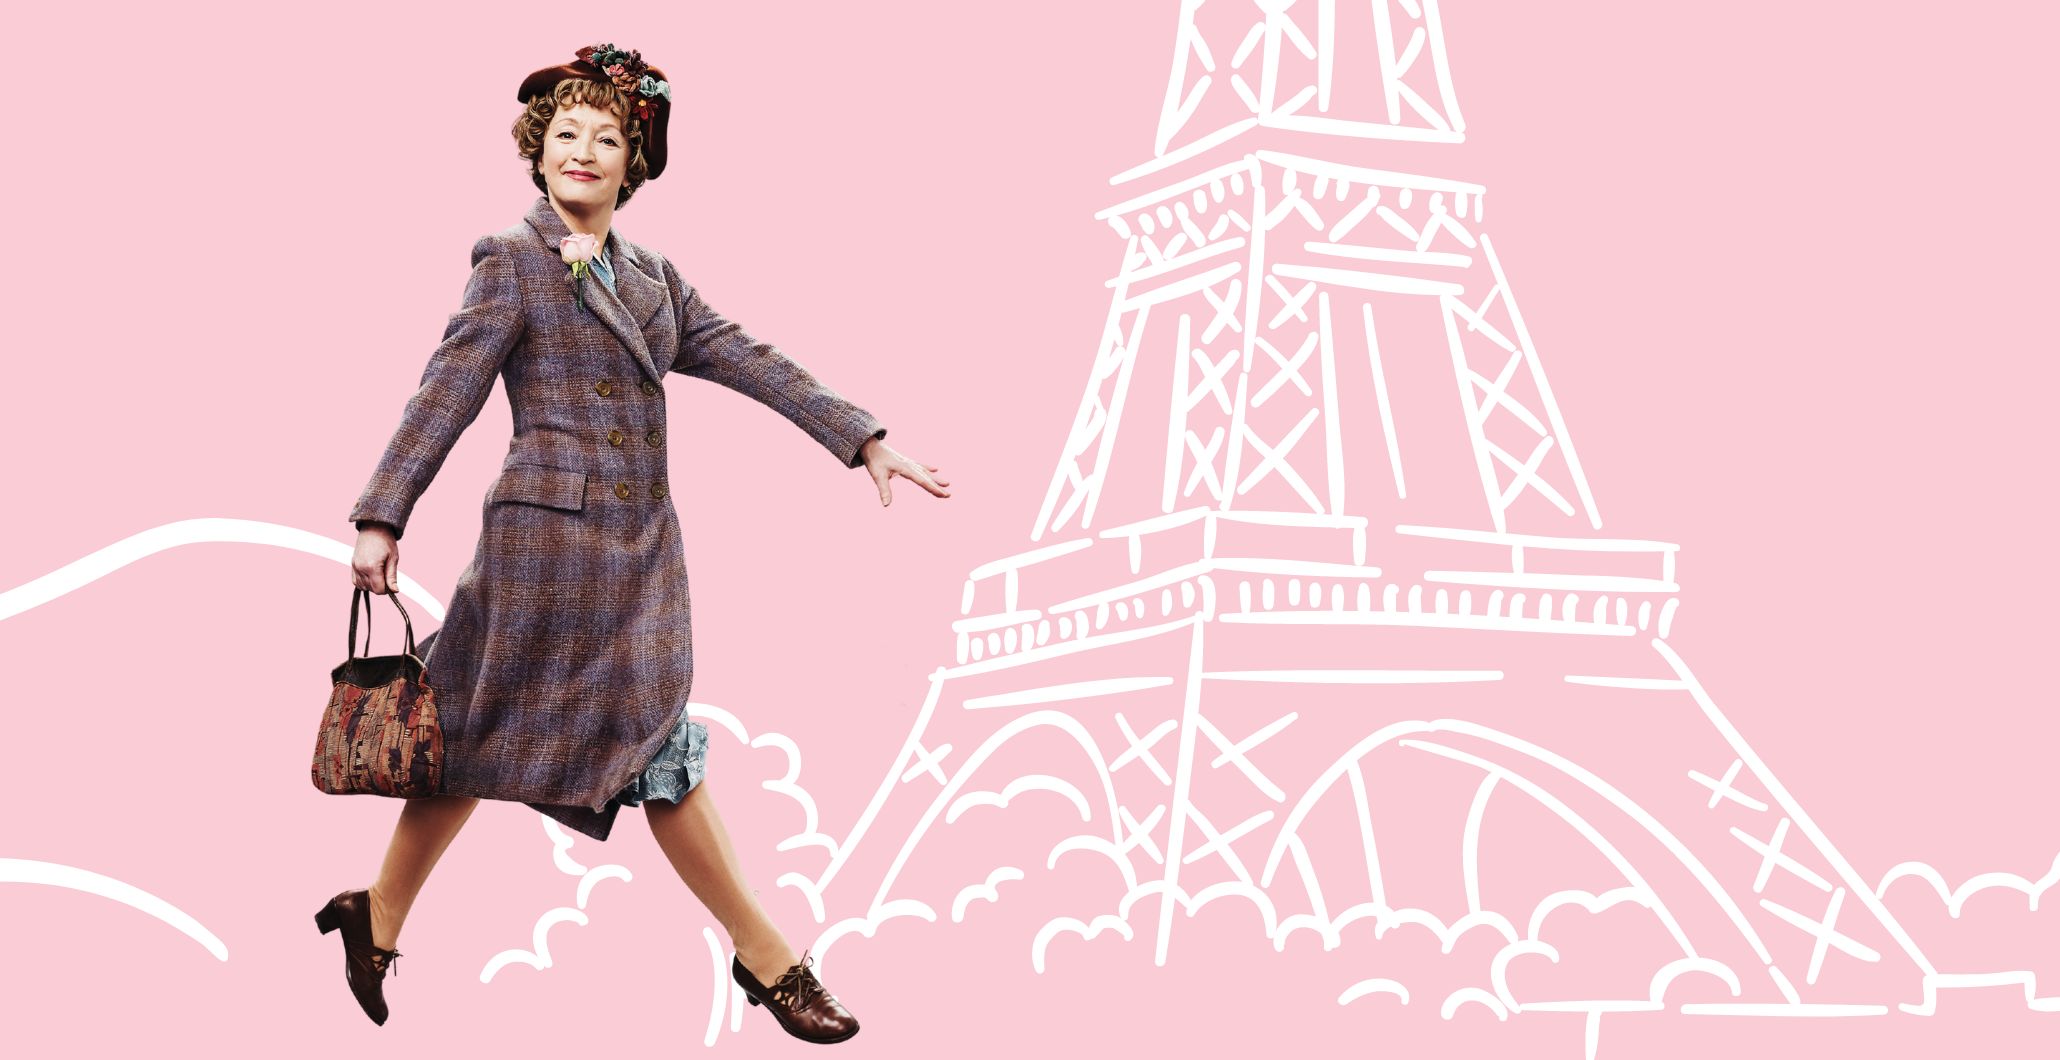 Movie Matinee: Mrs Harris Goes to Paris